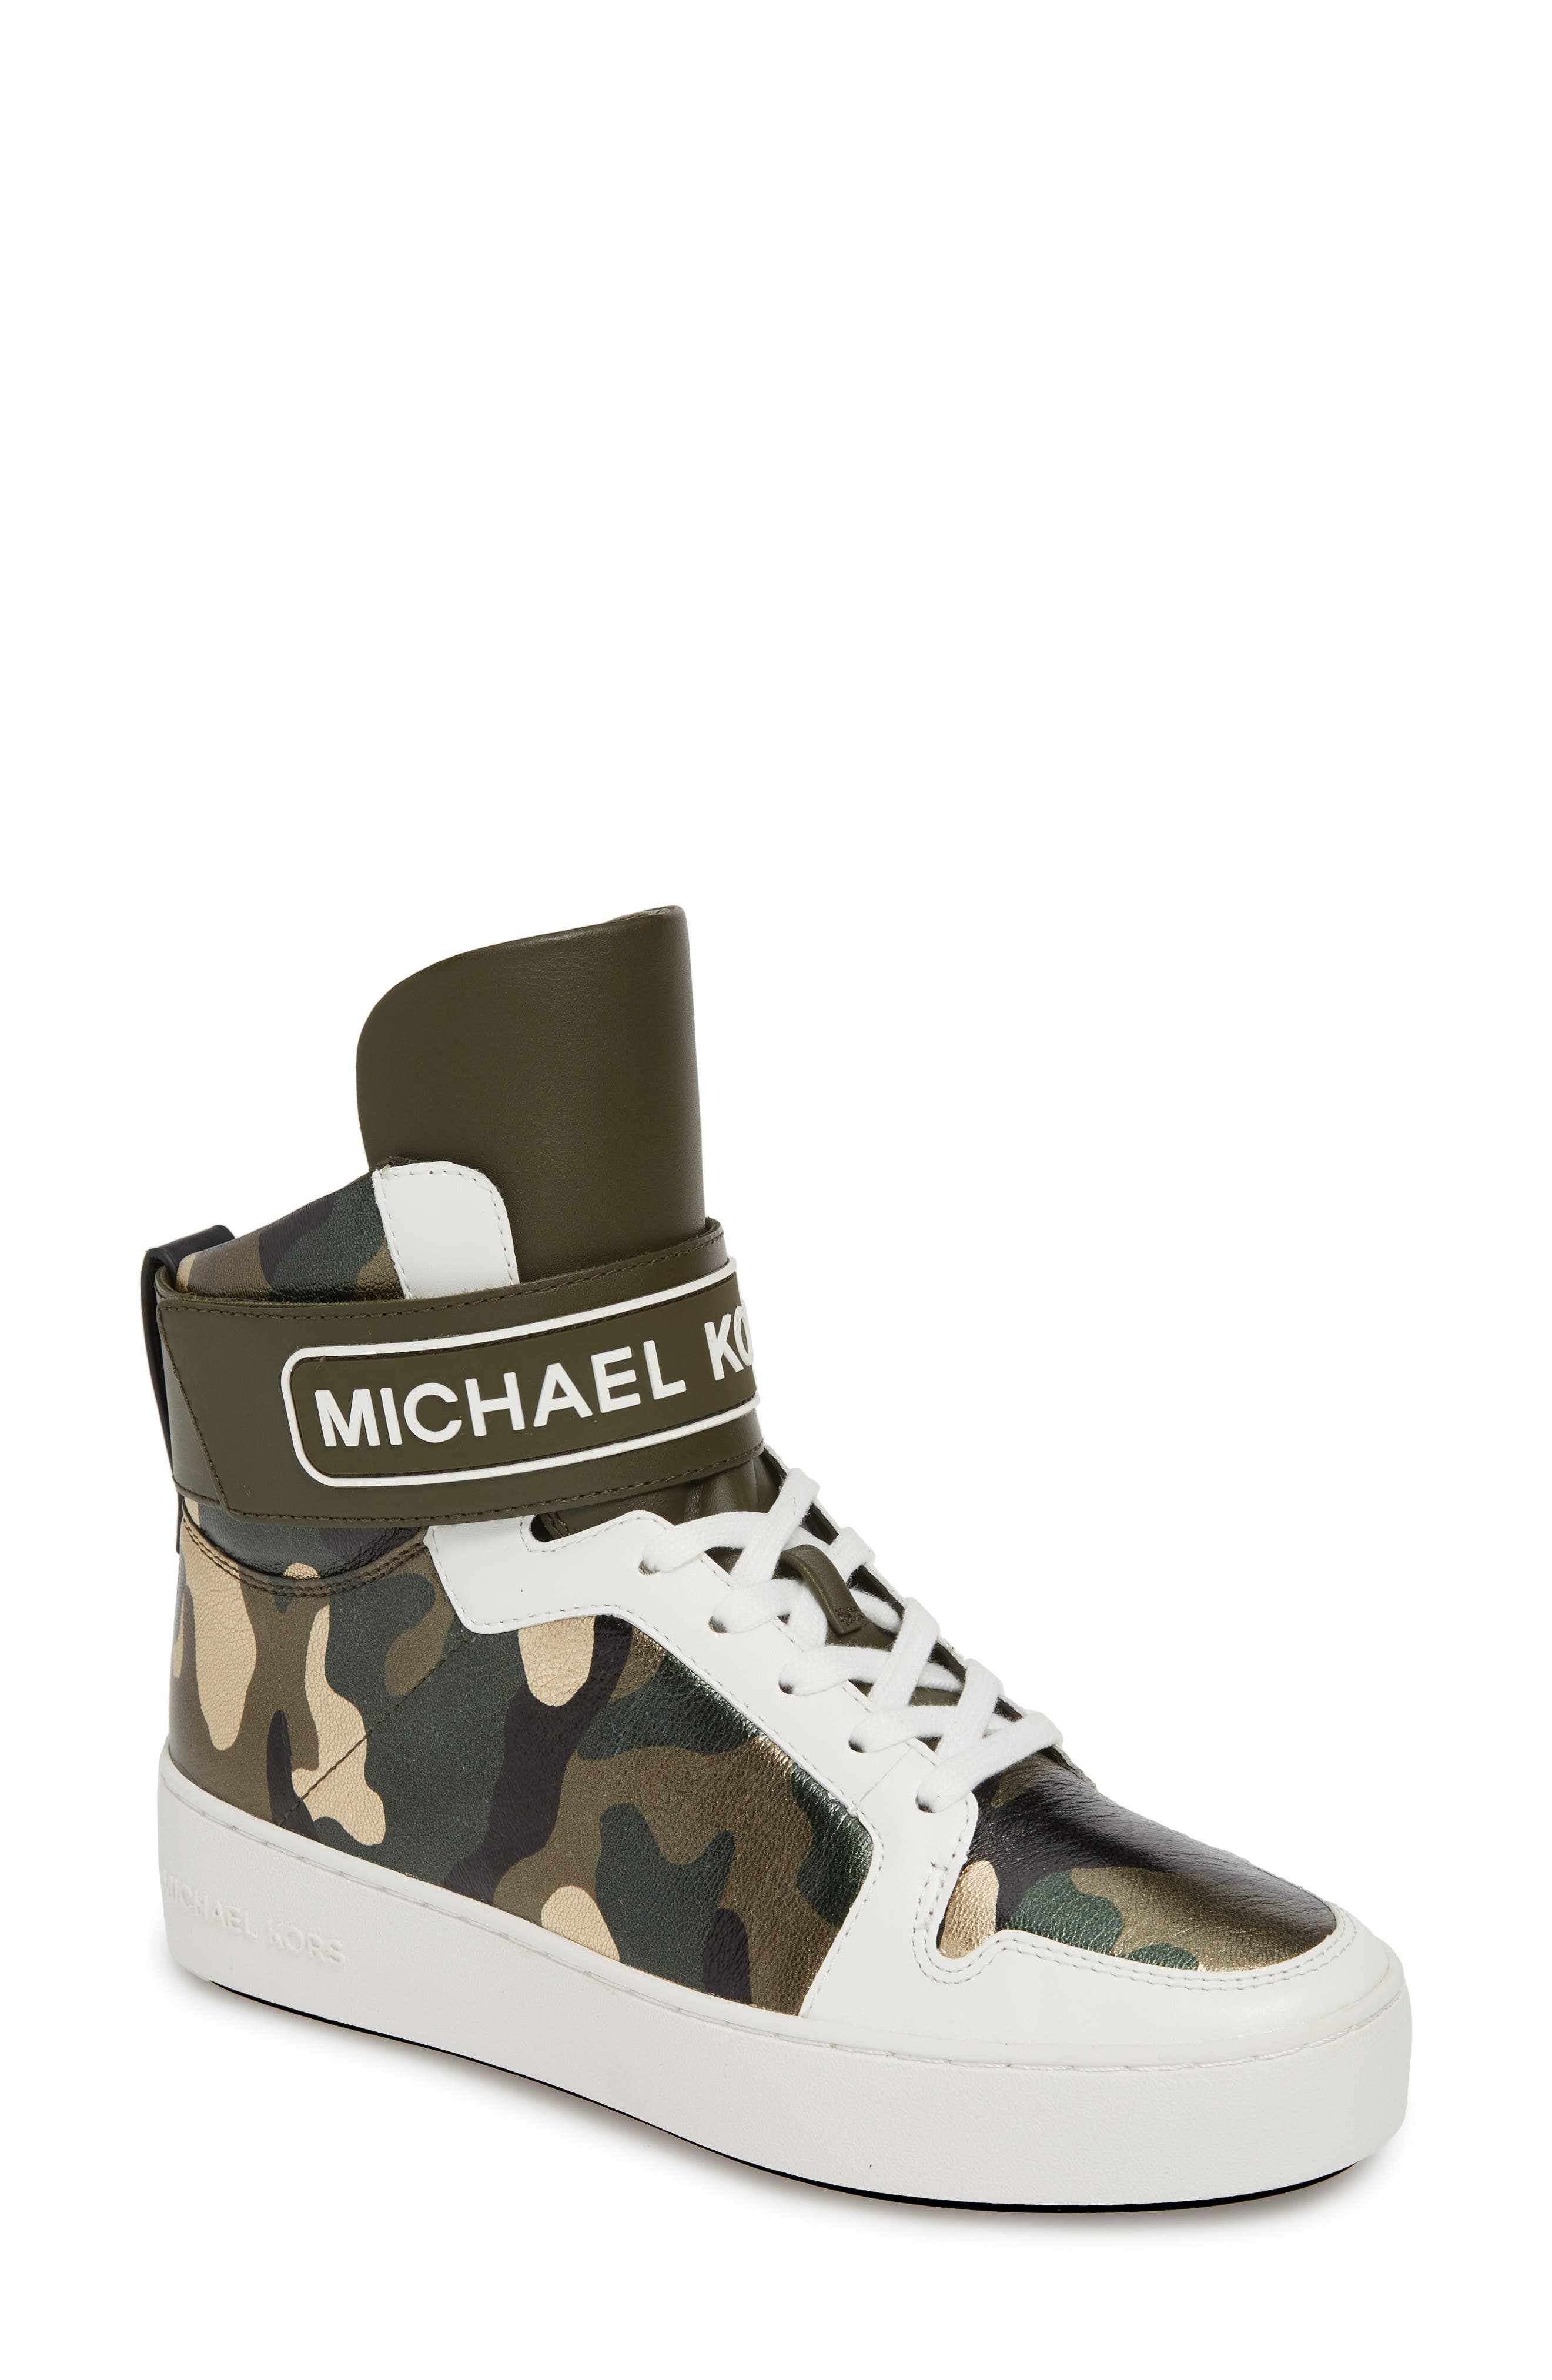 michael kors high sneakers